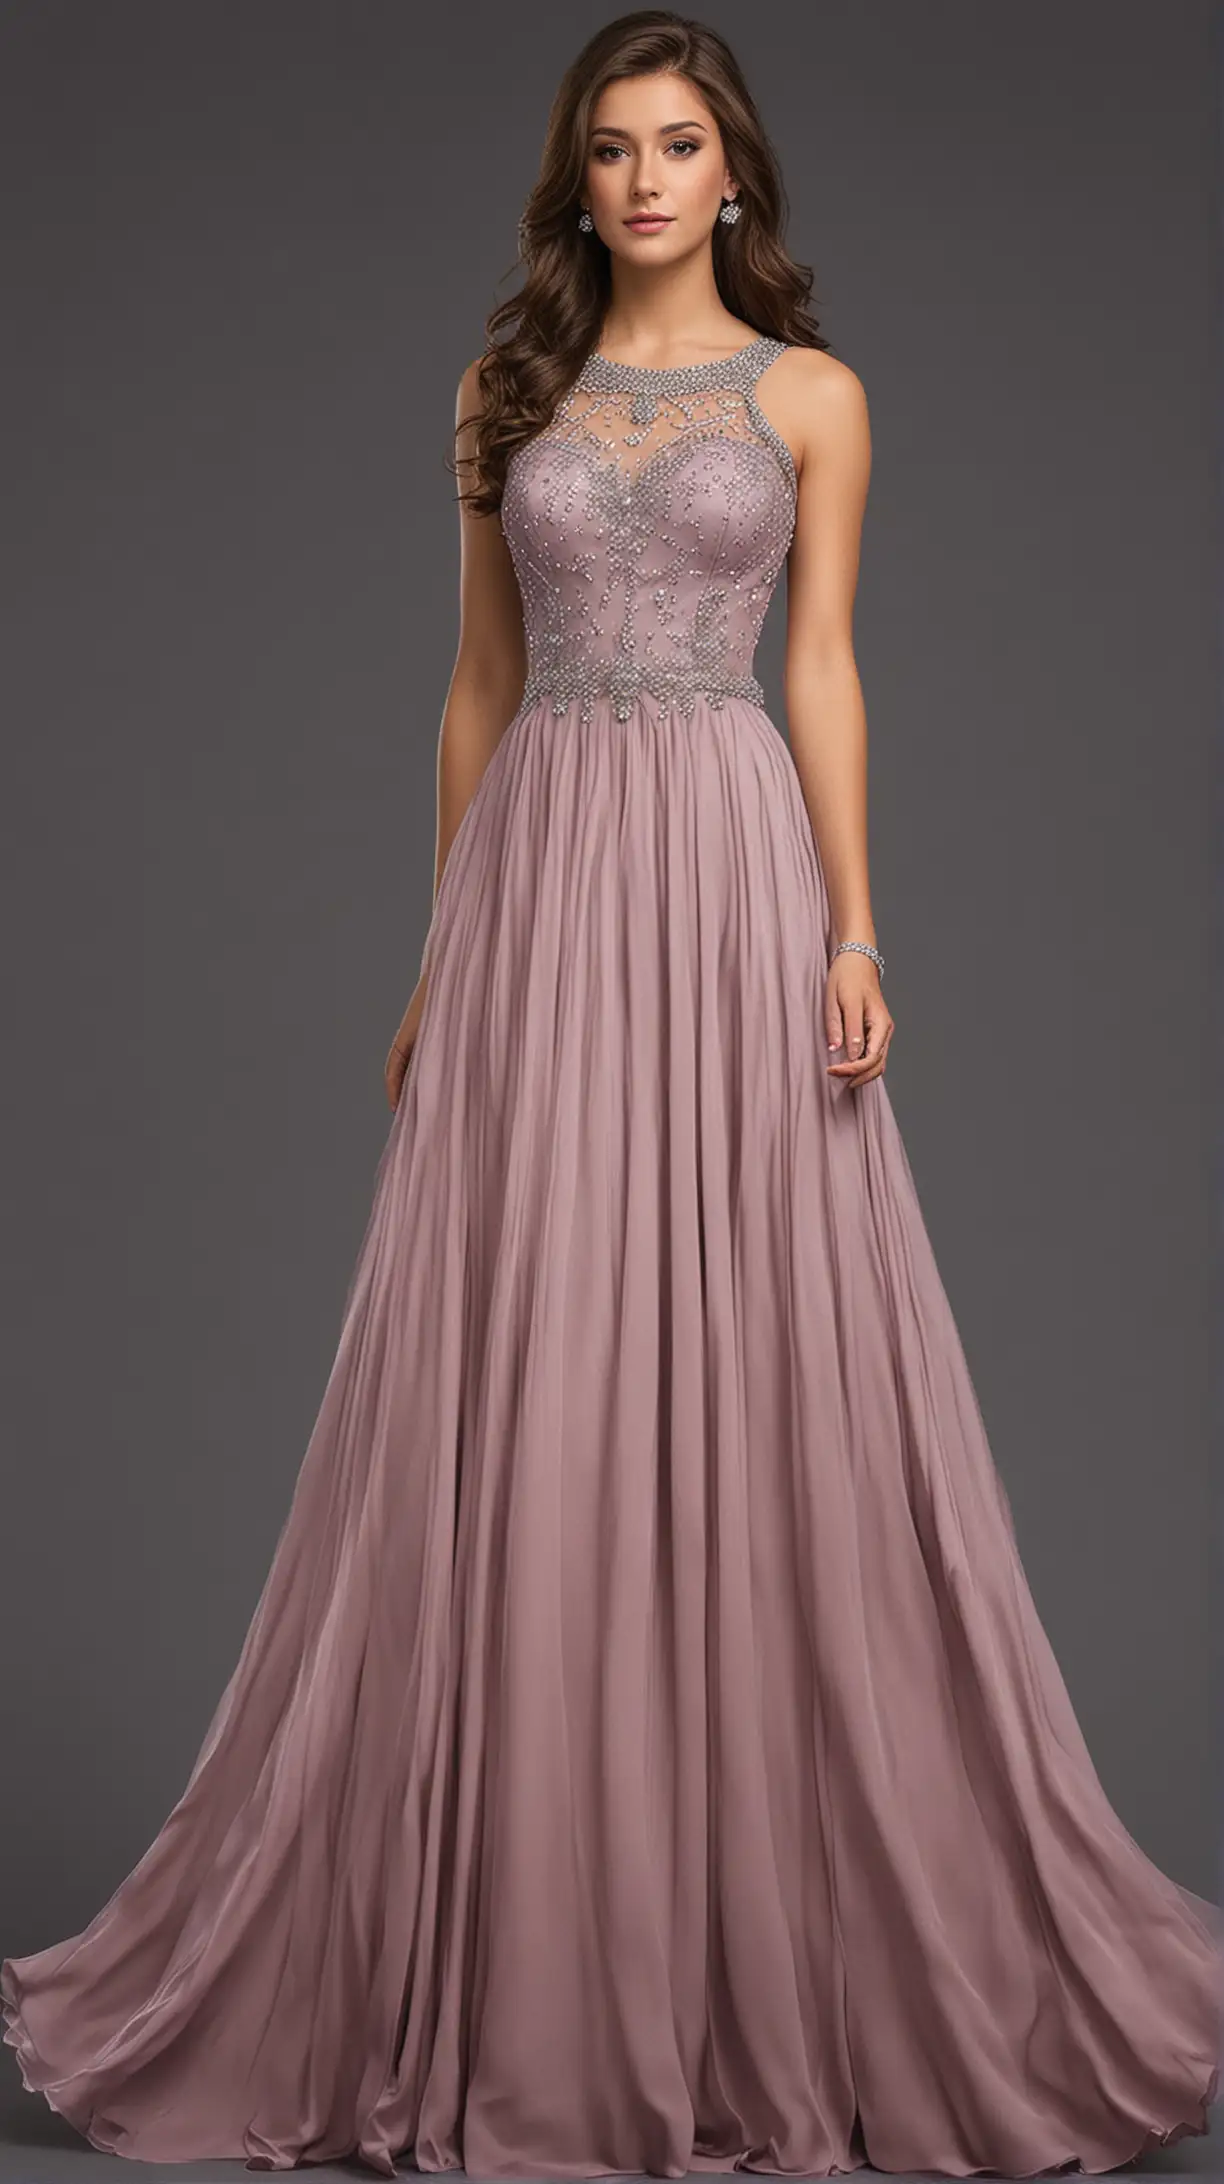 Elegant Dark Prom Dress with Stunning Jewelry for Girls